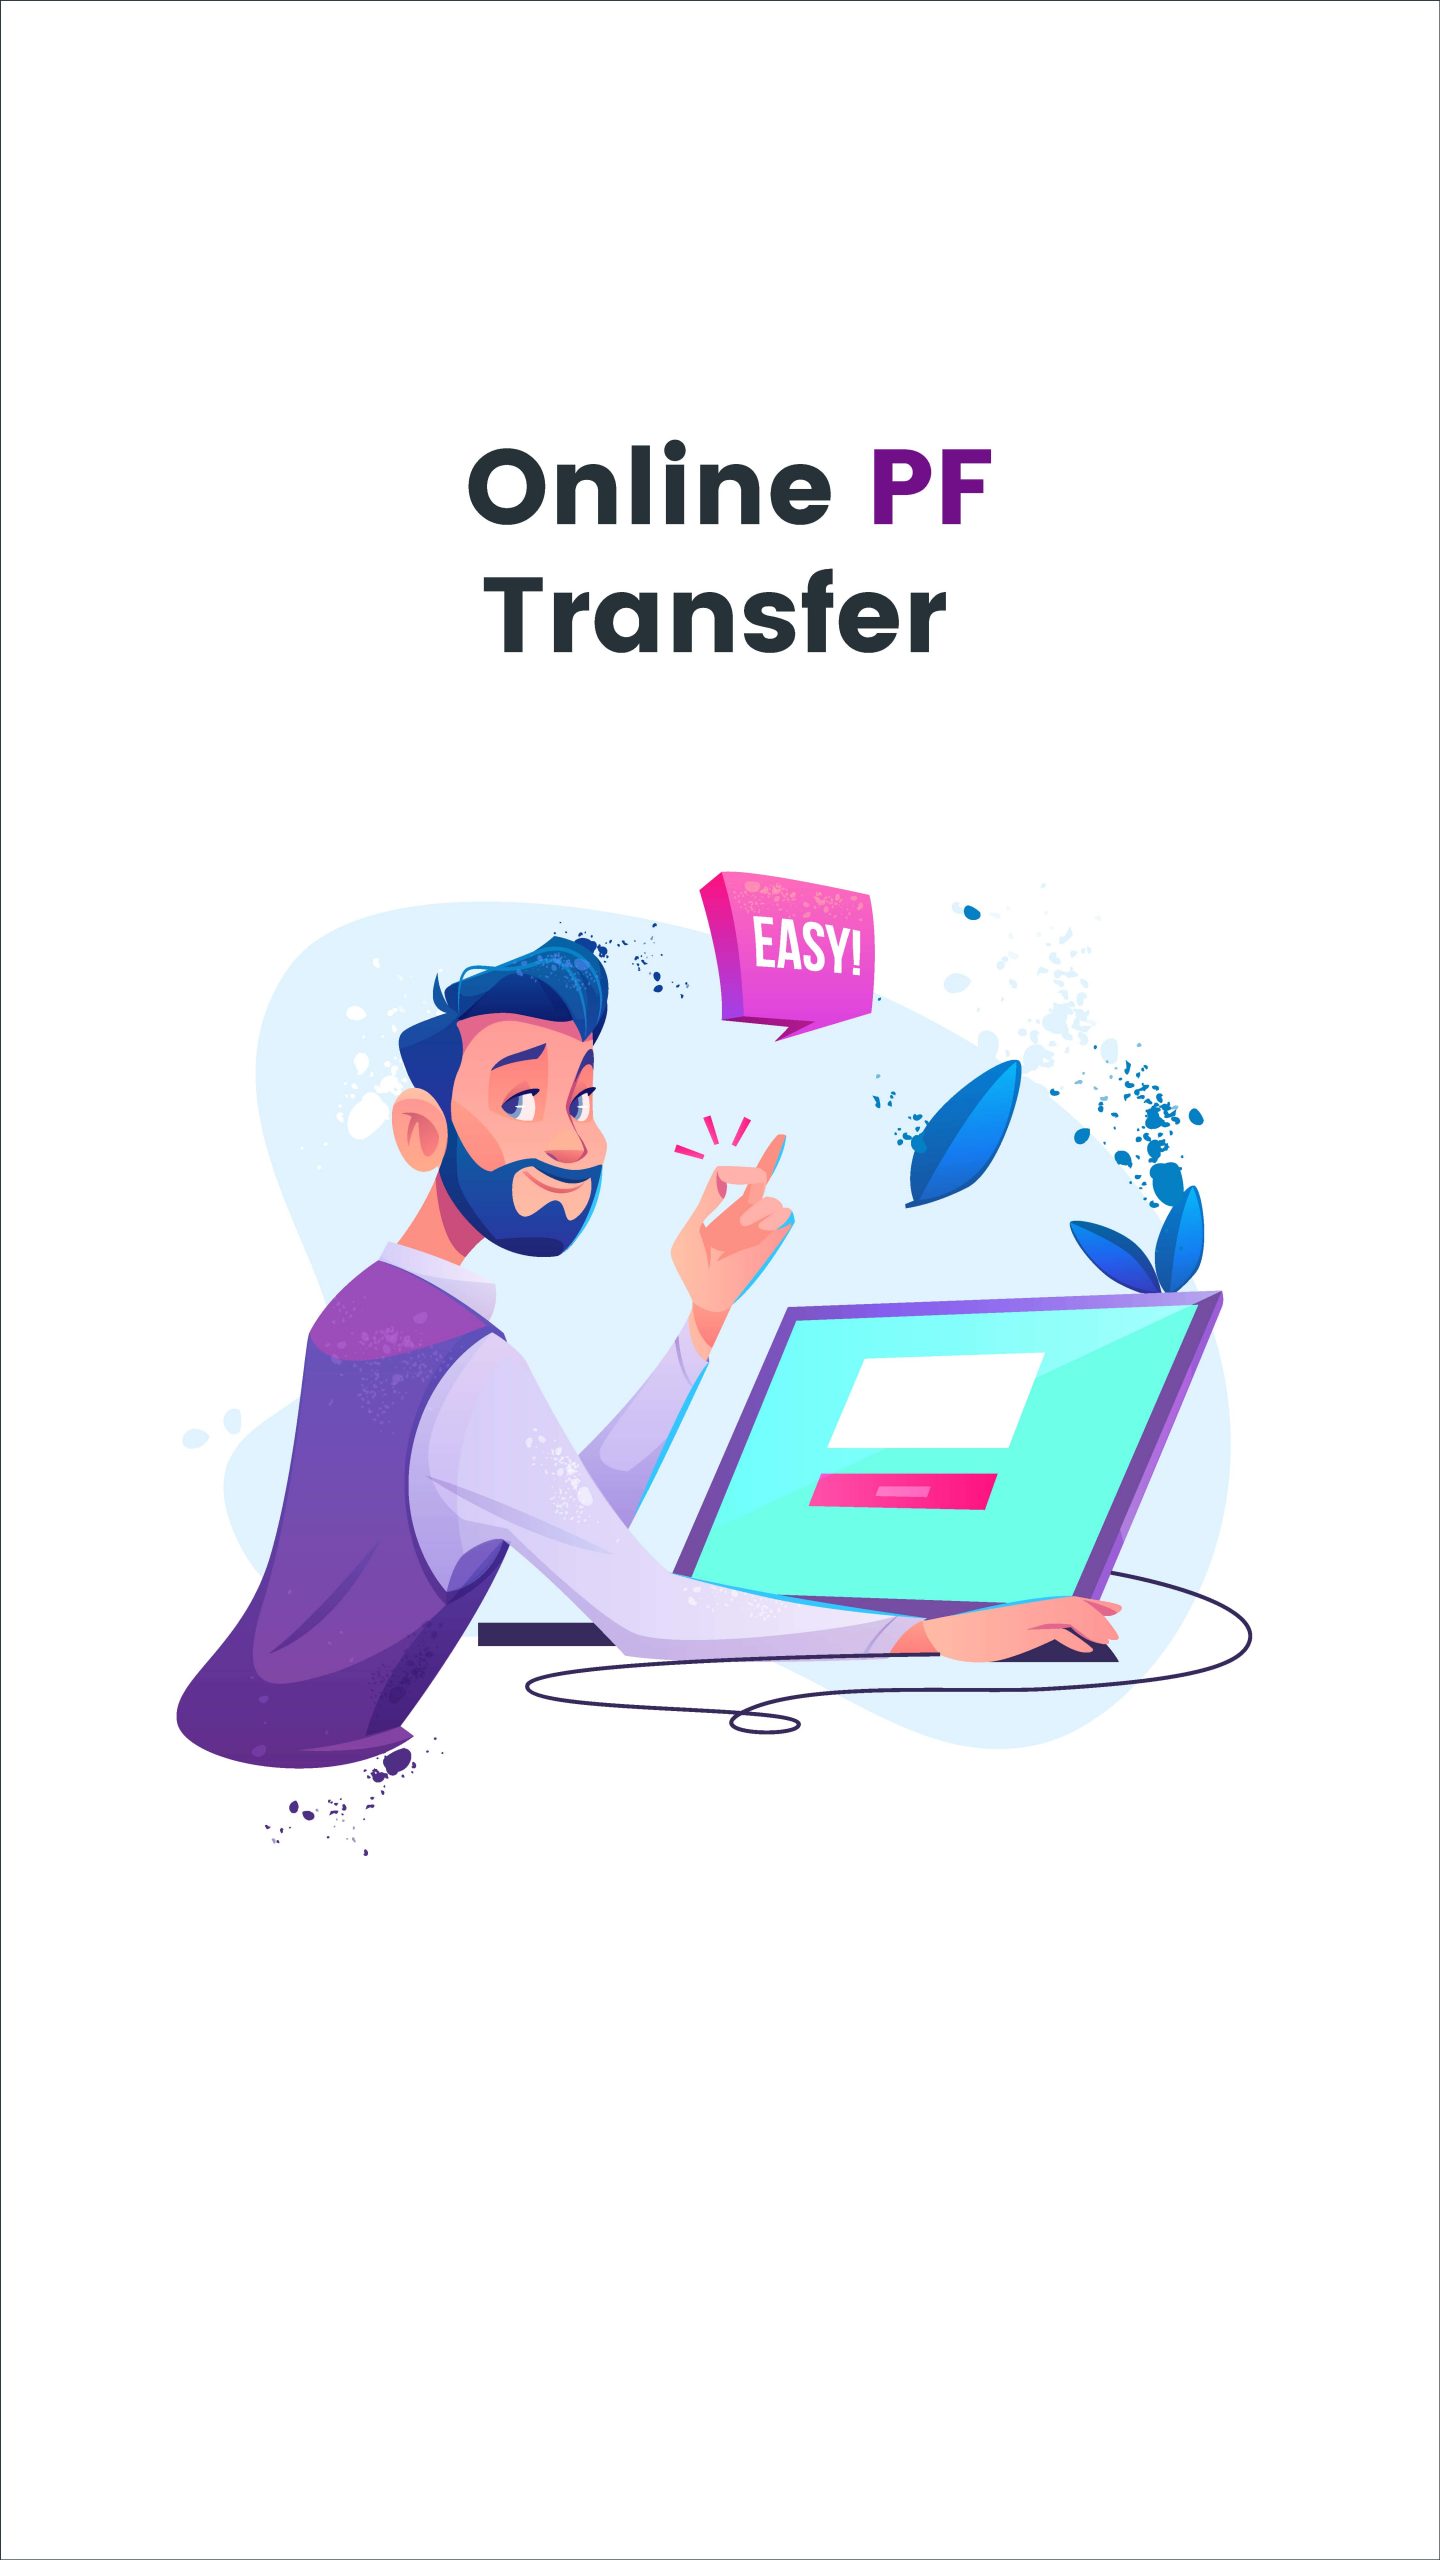 pf transfer online